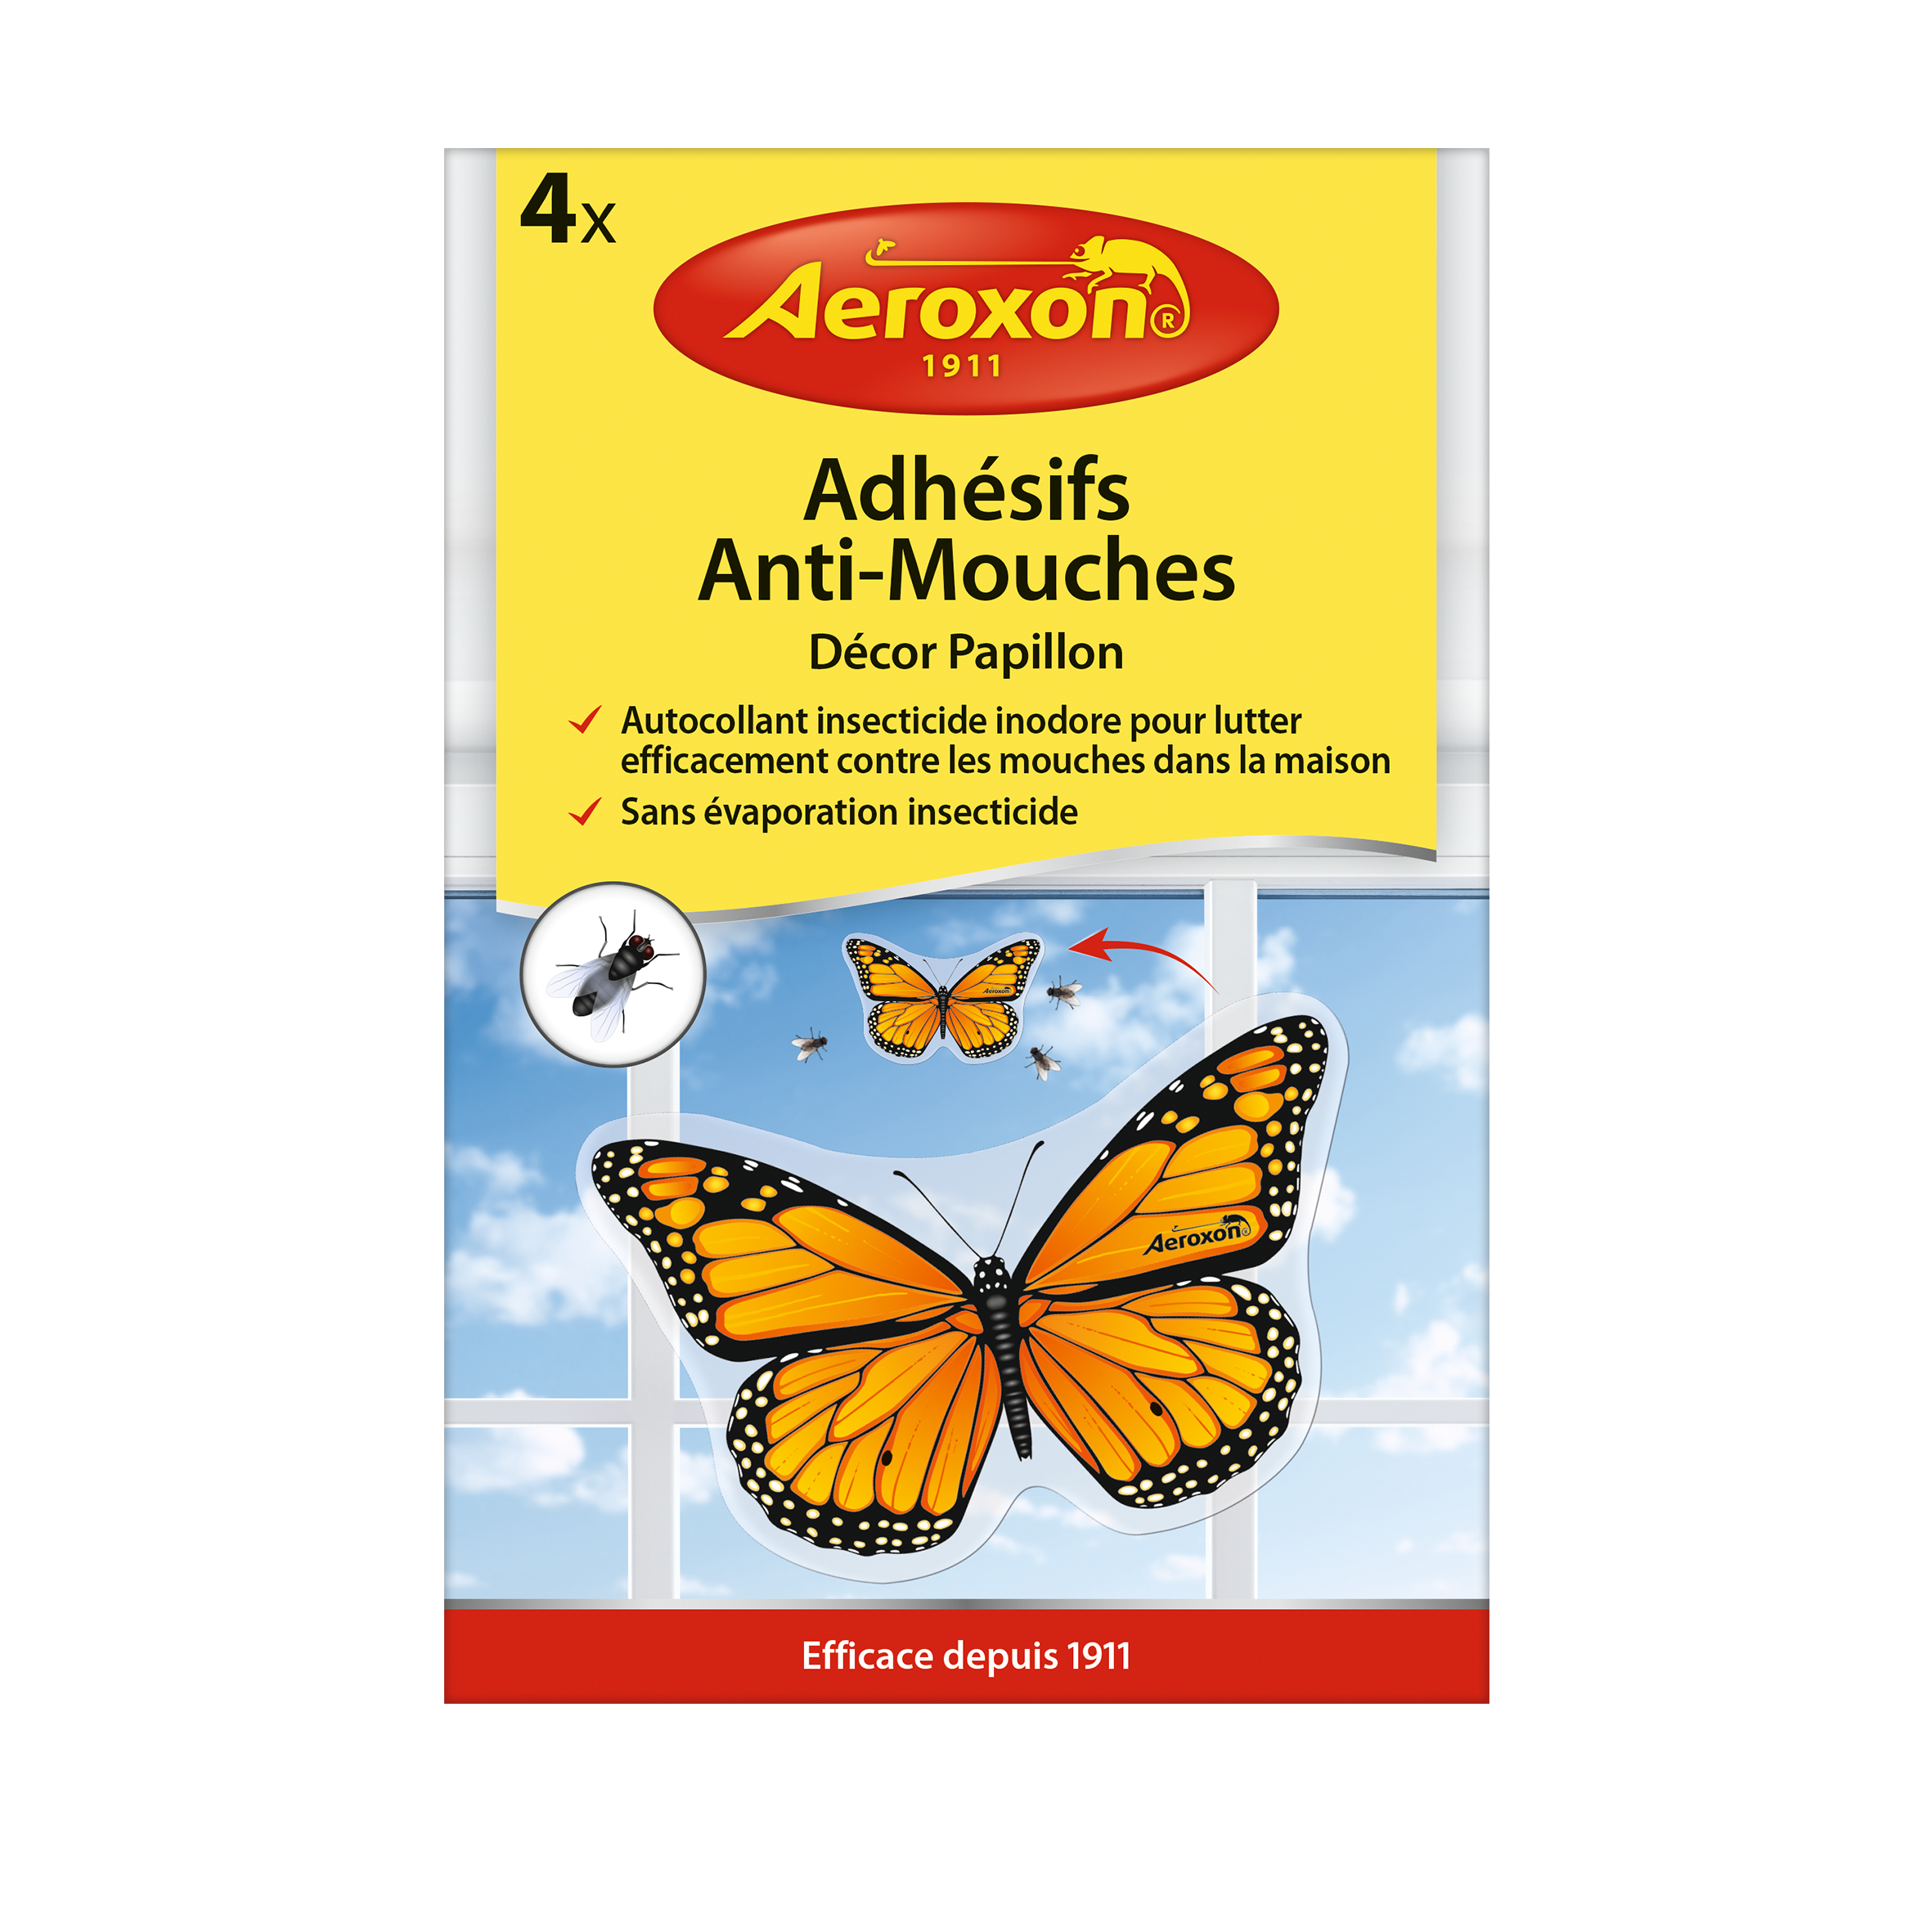 Aeroxon Adhésifs Anti-Mouches Papillon 4 pcs. image